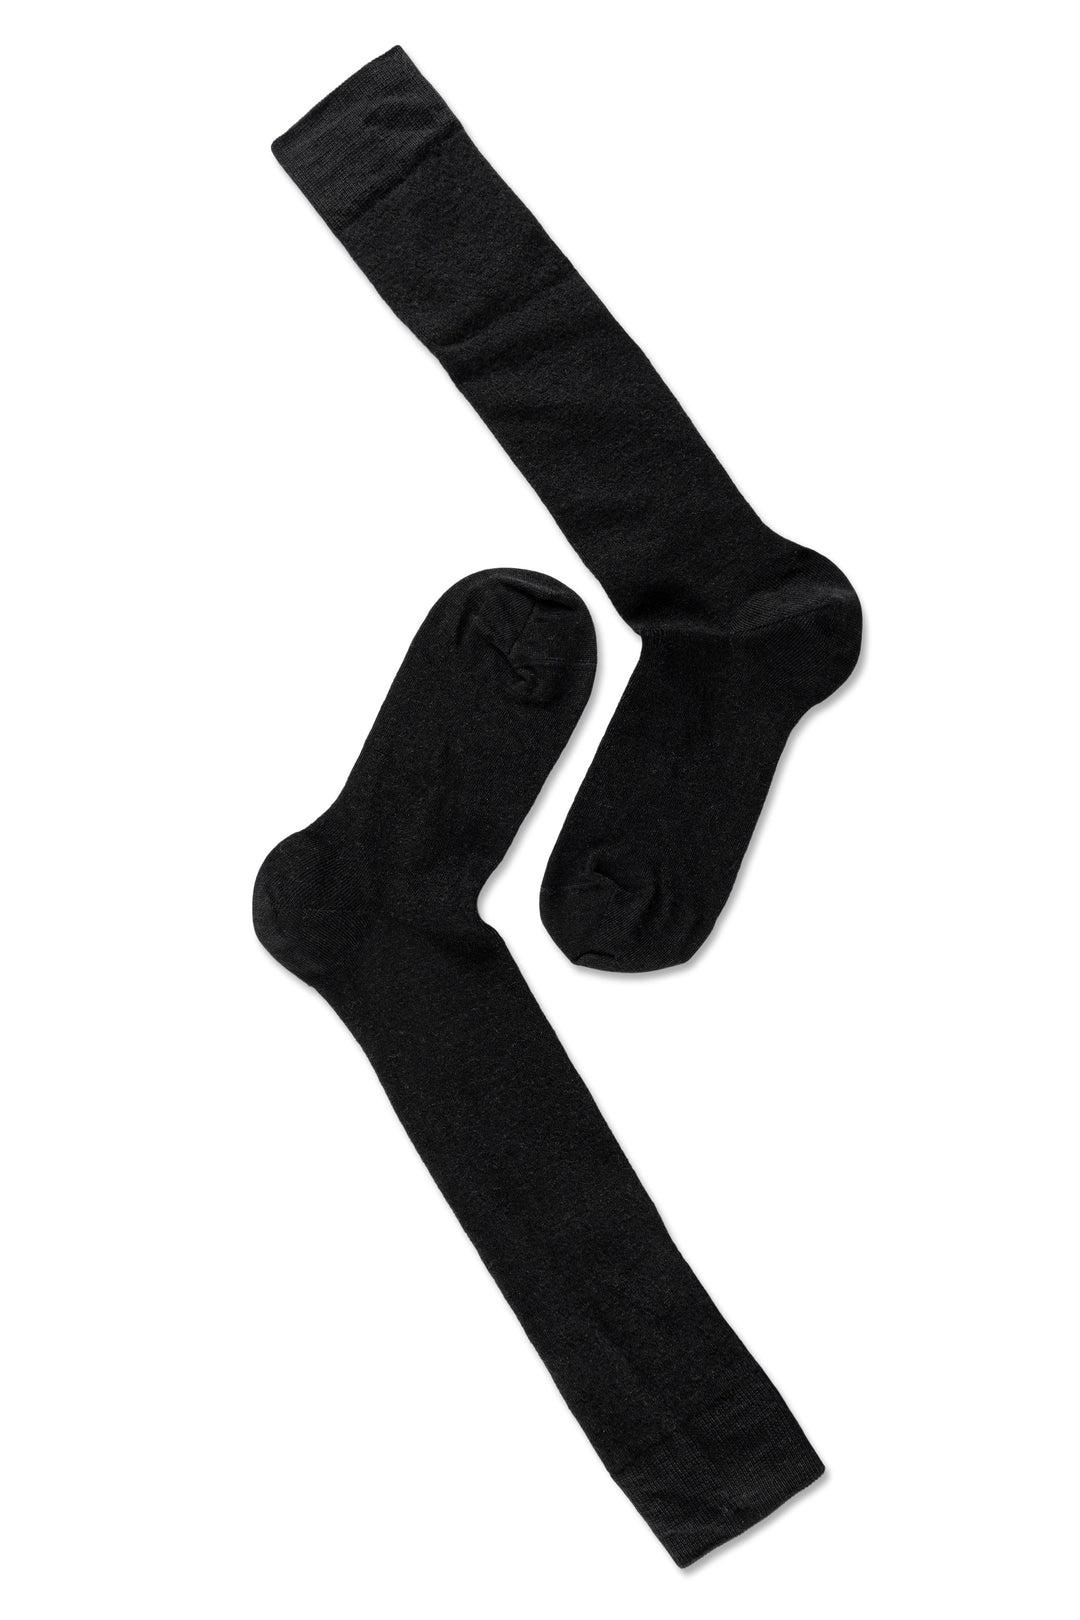 Note by Syversen | Knæstrømper | Flat knit wool knee-high, black